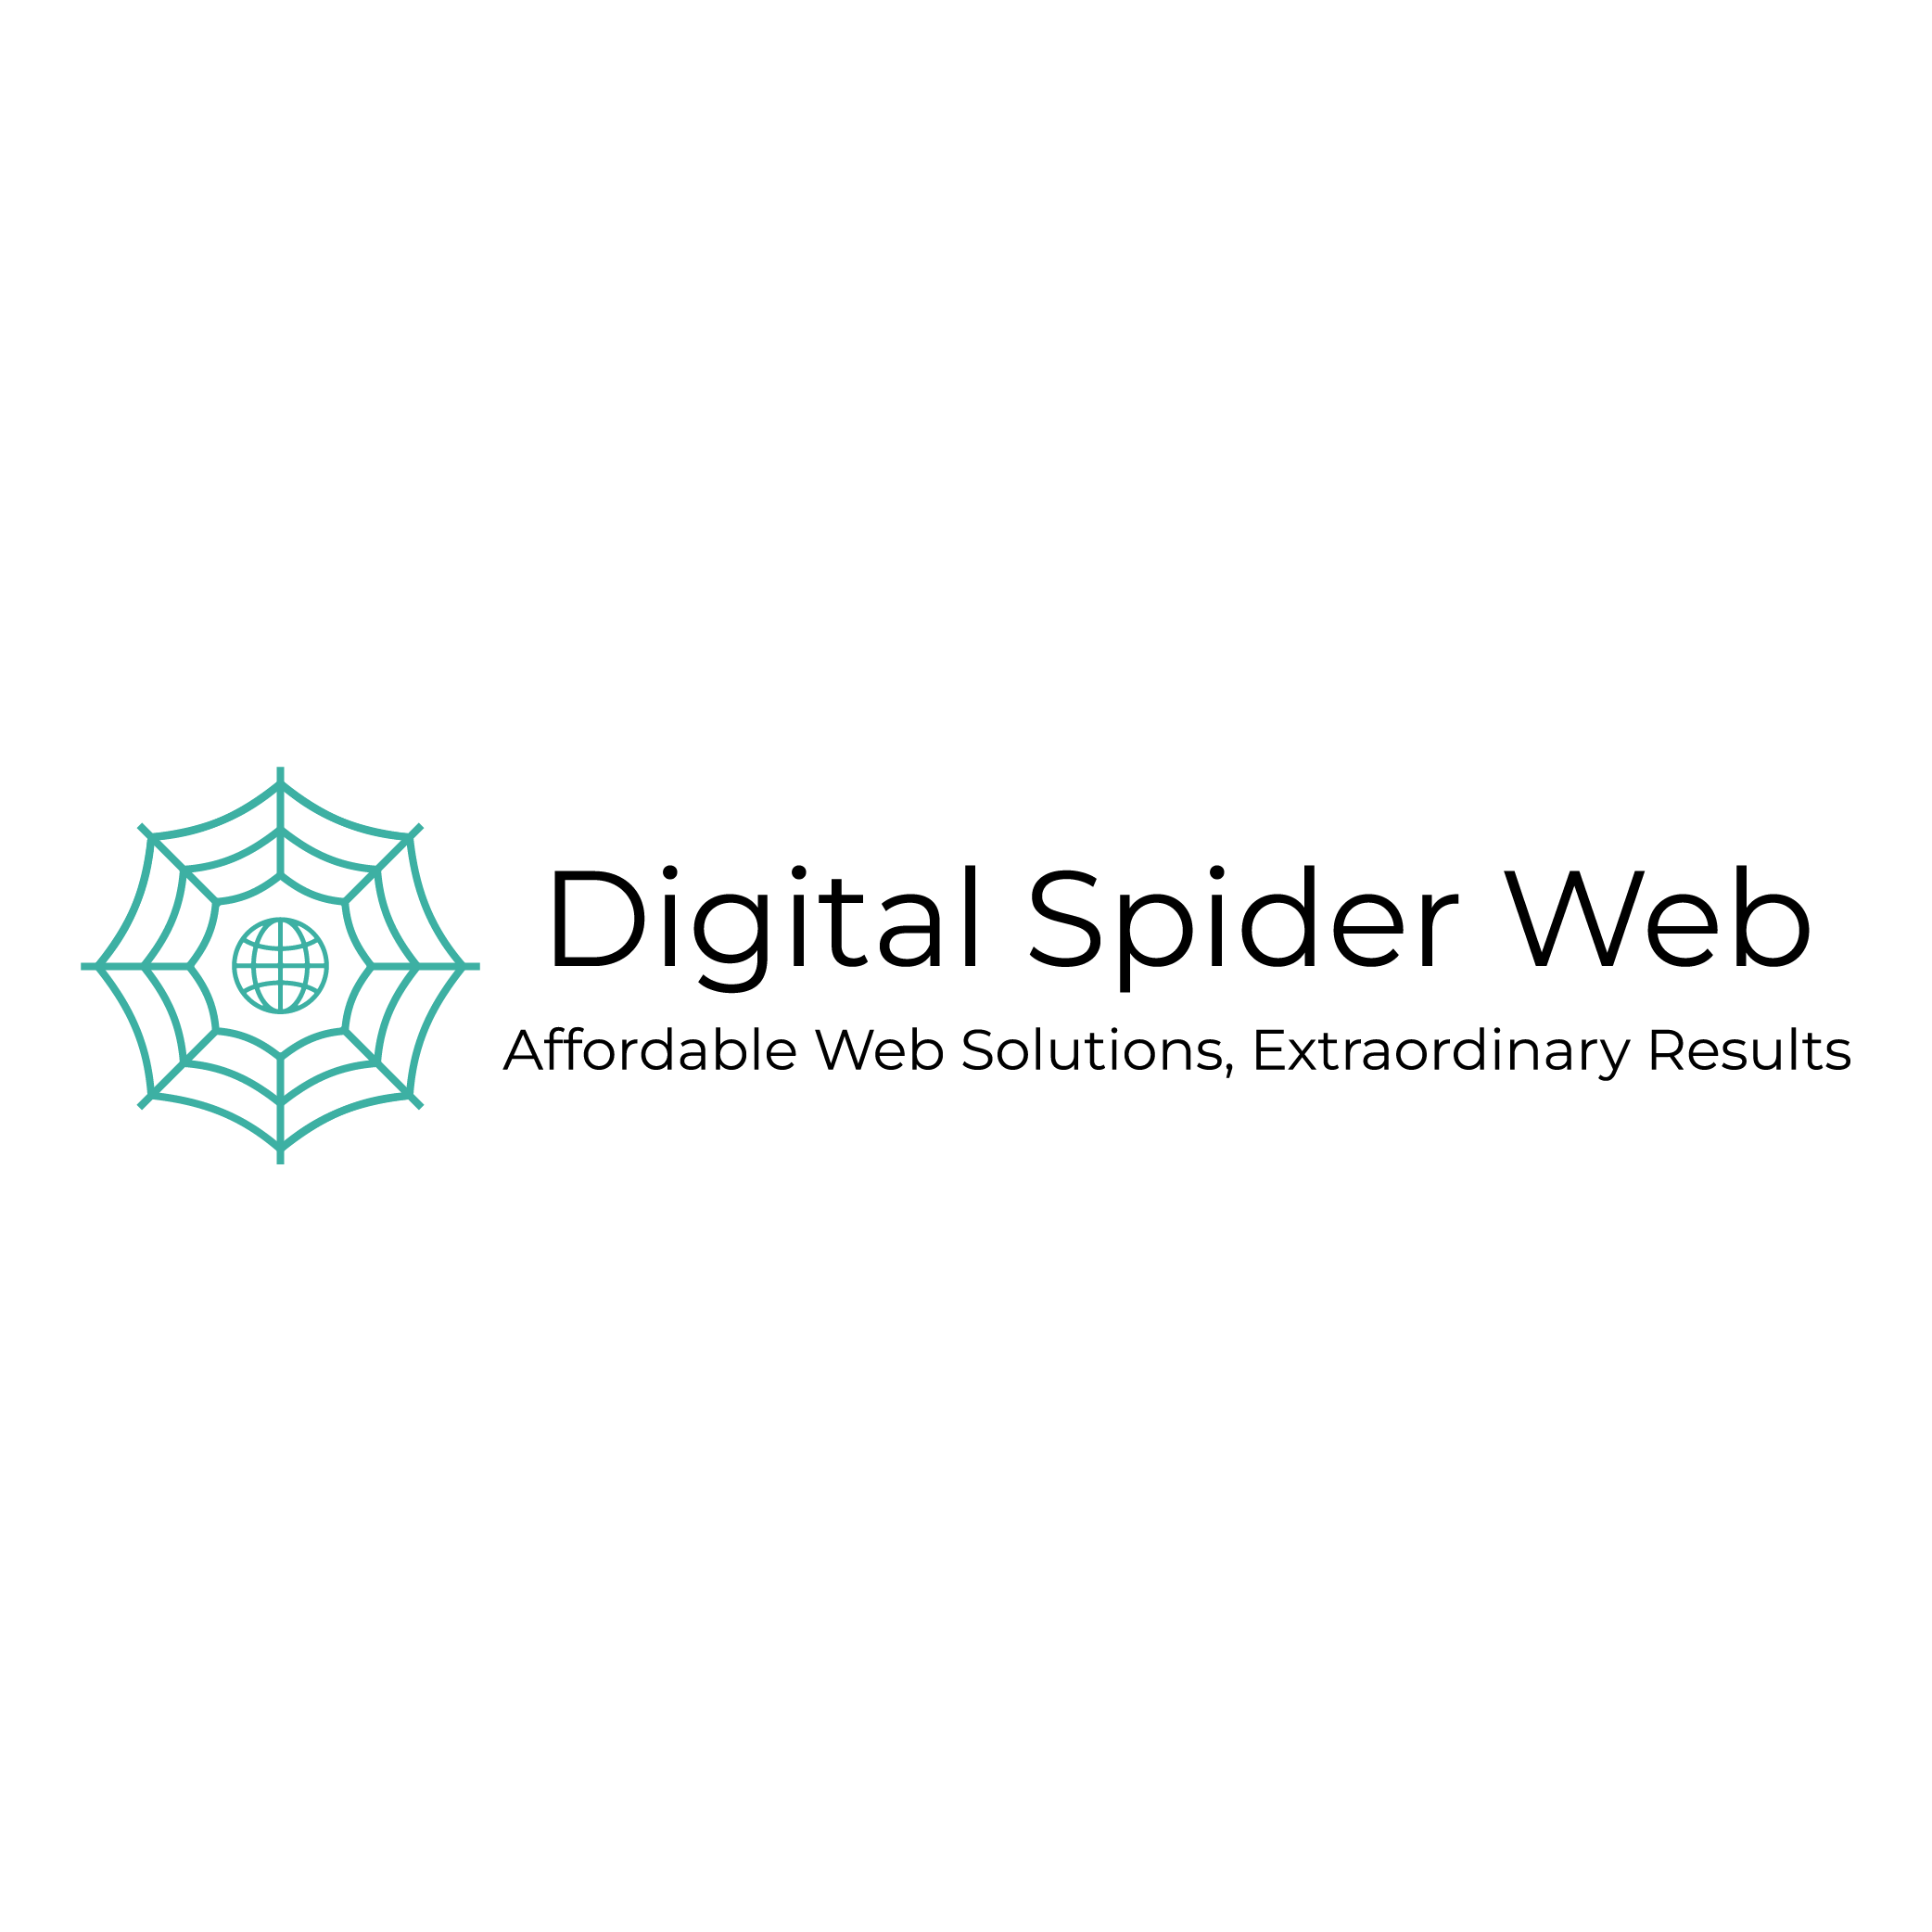 Digital Spider Web